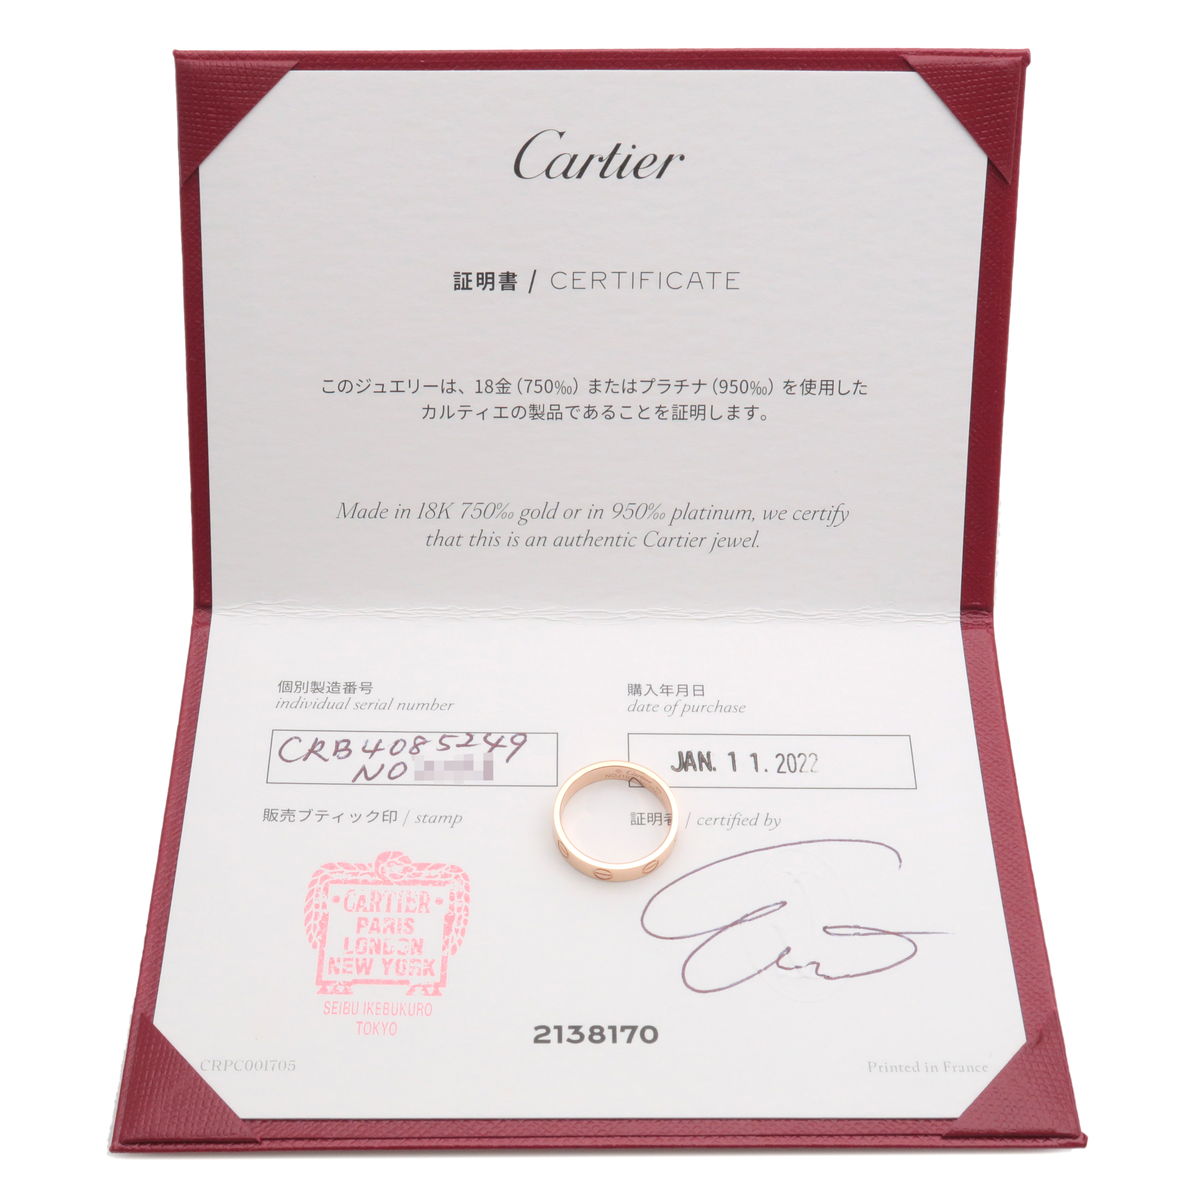 Cartier Mini Love Ring K18PG 750 Rose Gold #49 US5 HK10.5 EU9